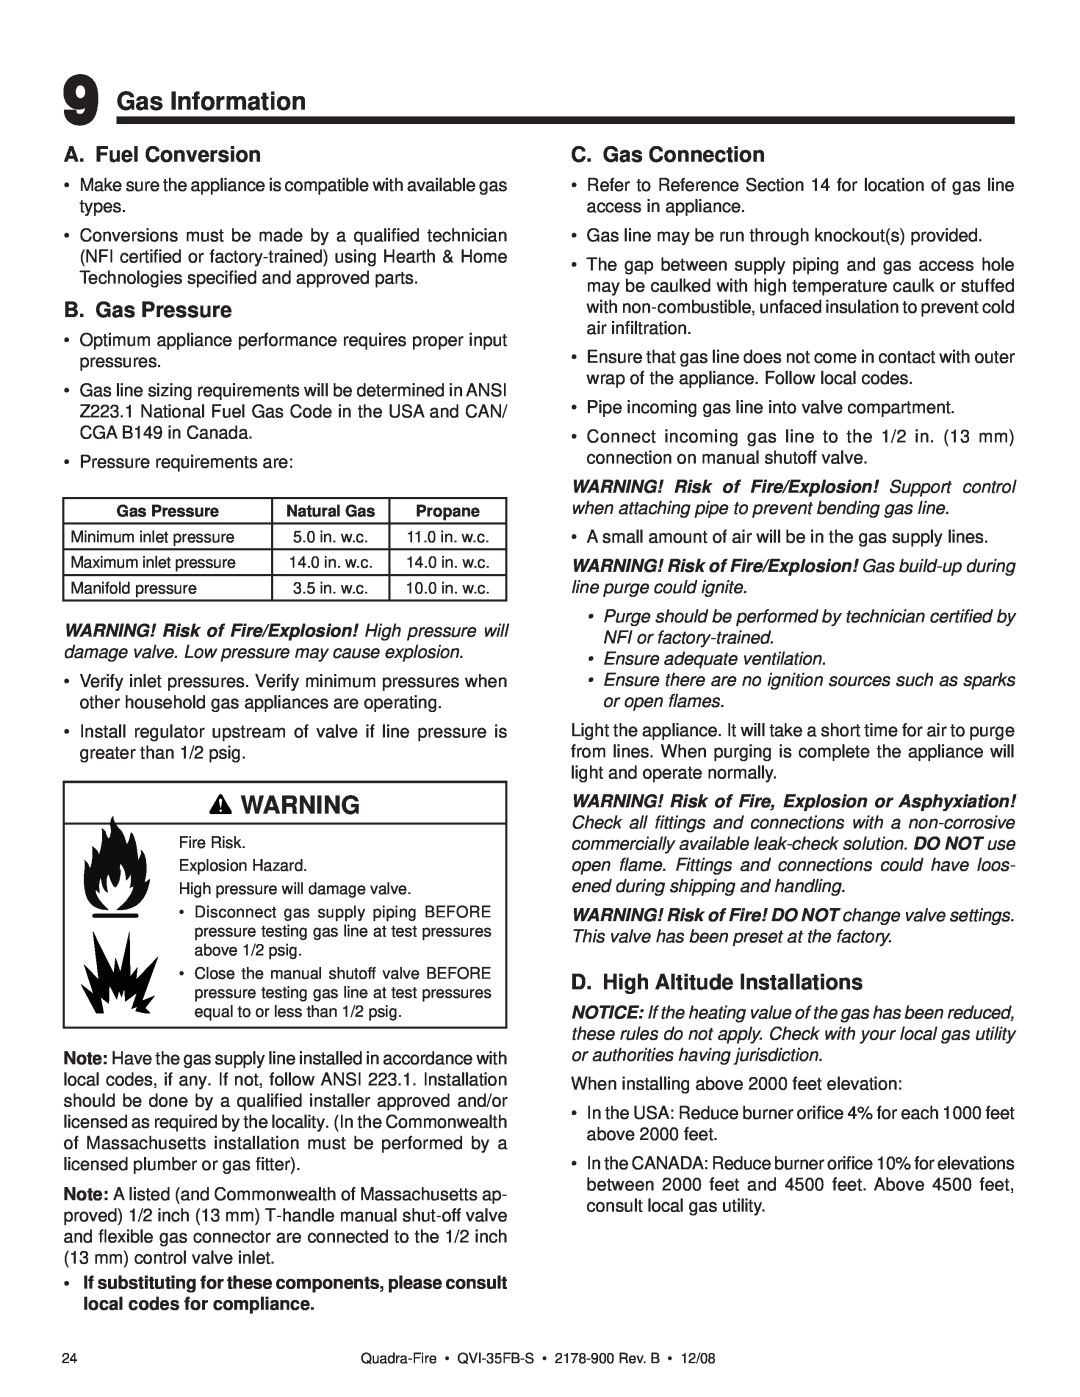 Quadra-Fire QVI-35FB-S owner manual Gas Information, A. Fuel Conversion, B. Gas Pressure, C. Gas Connection 